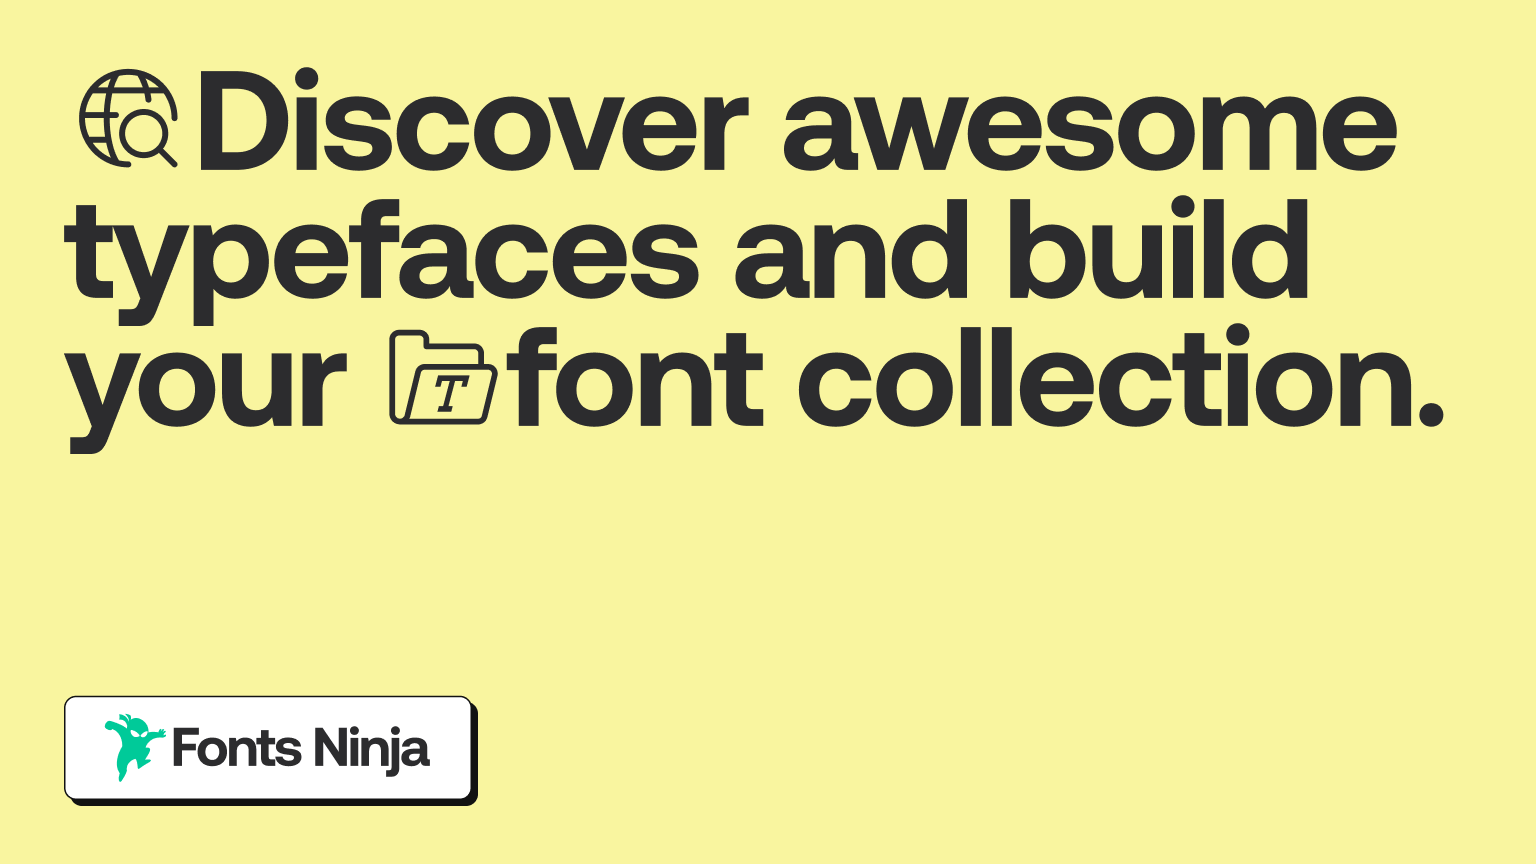 Fonts Ninja (Website)